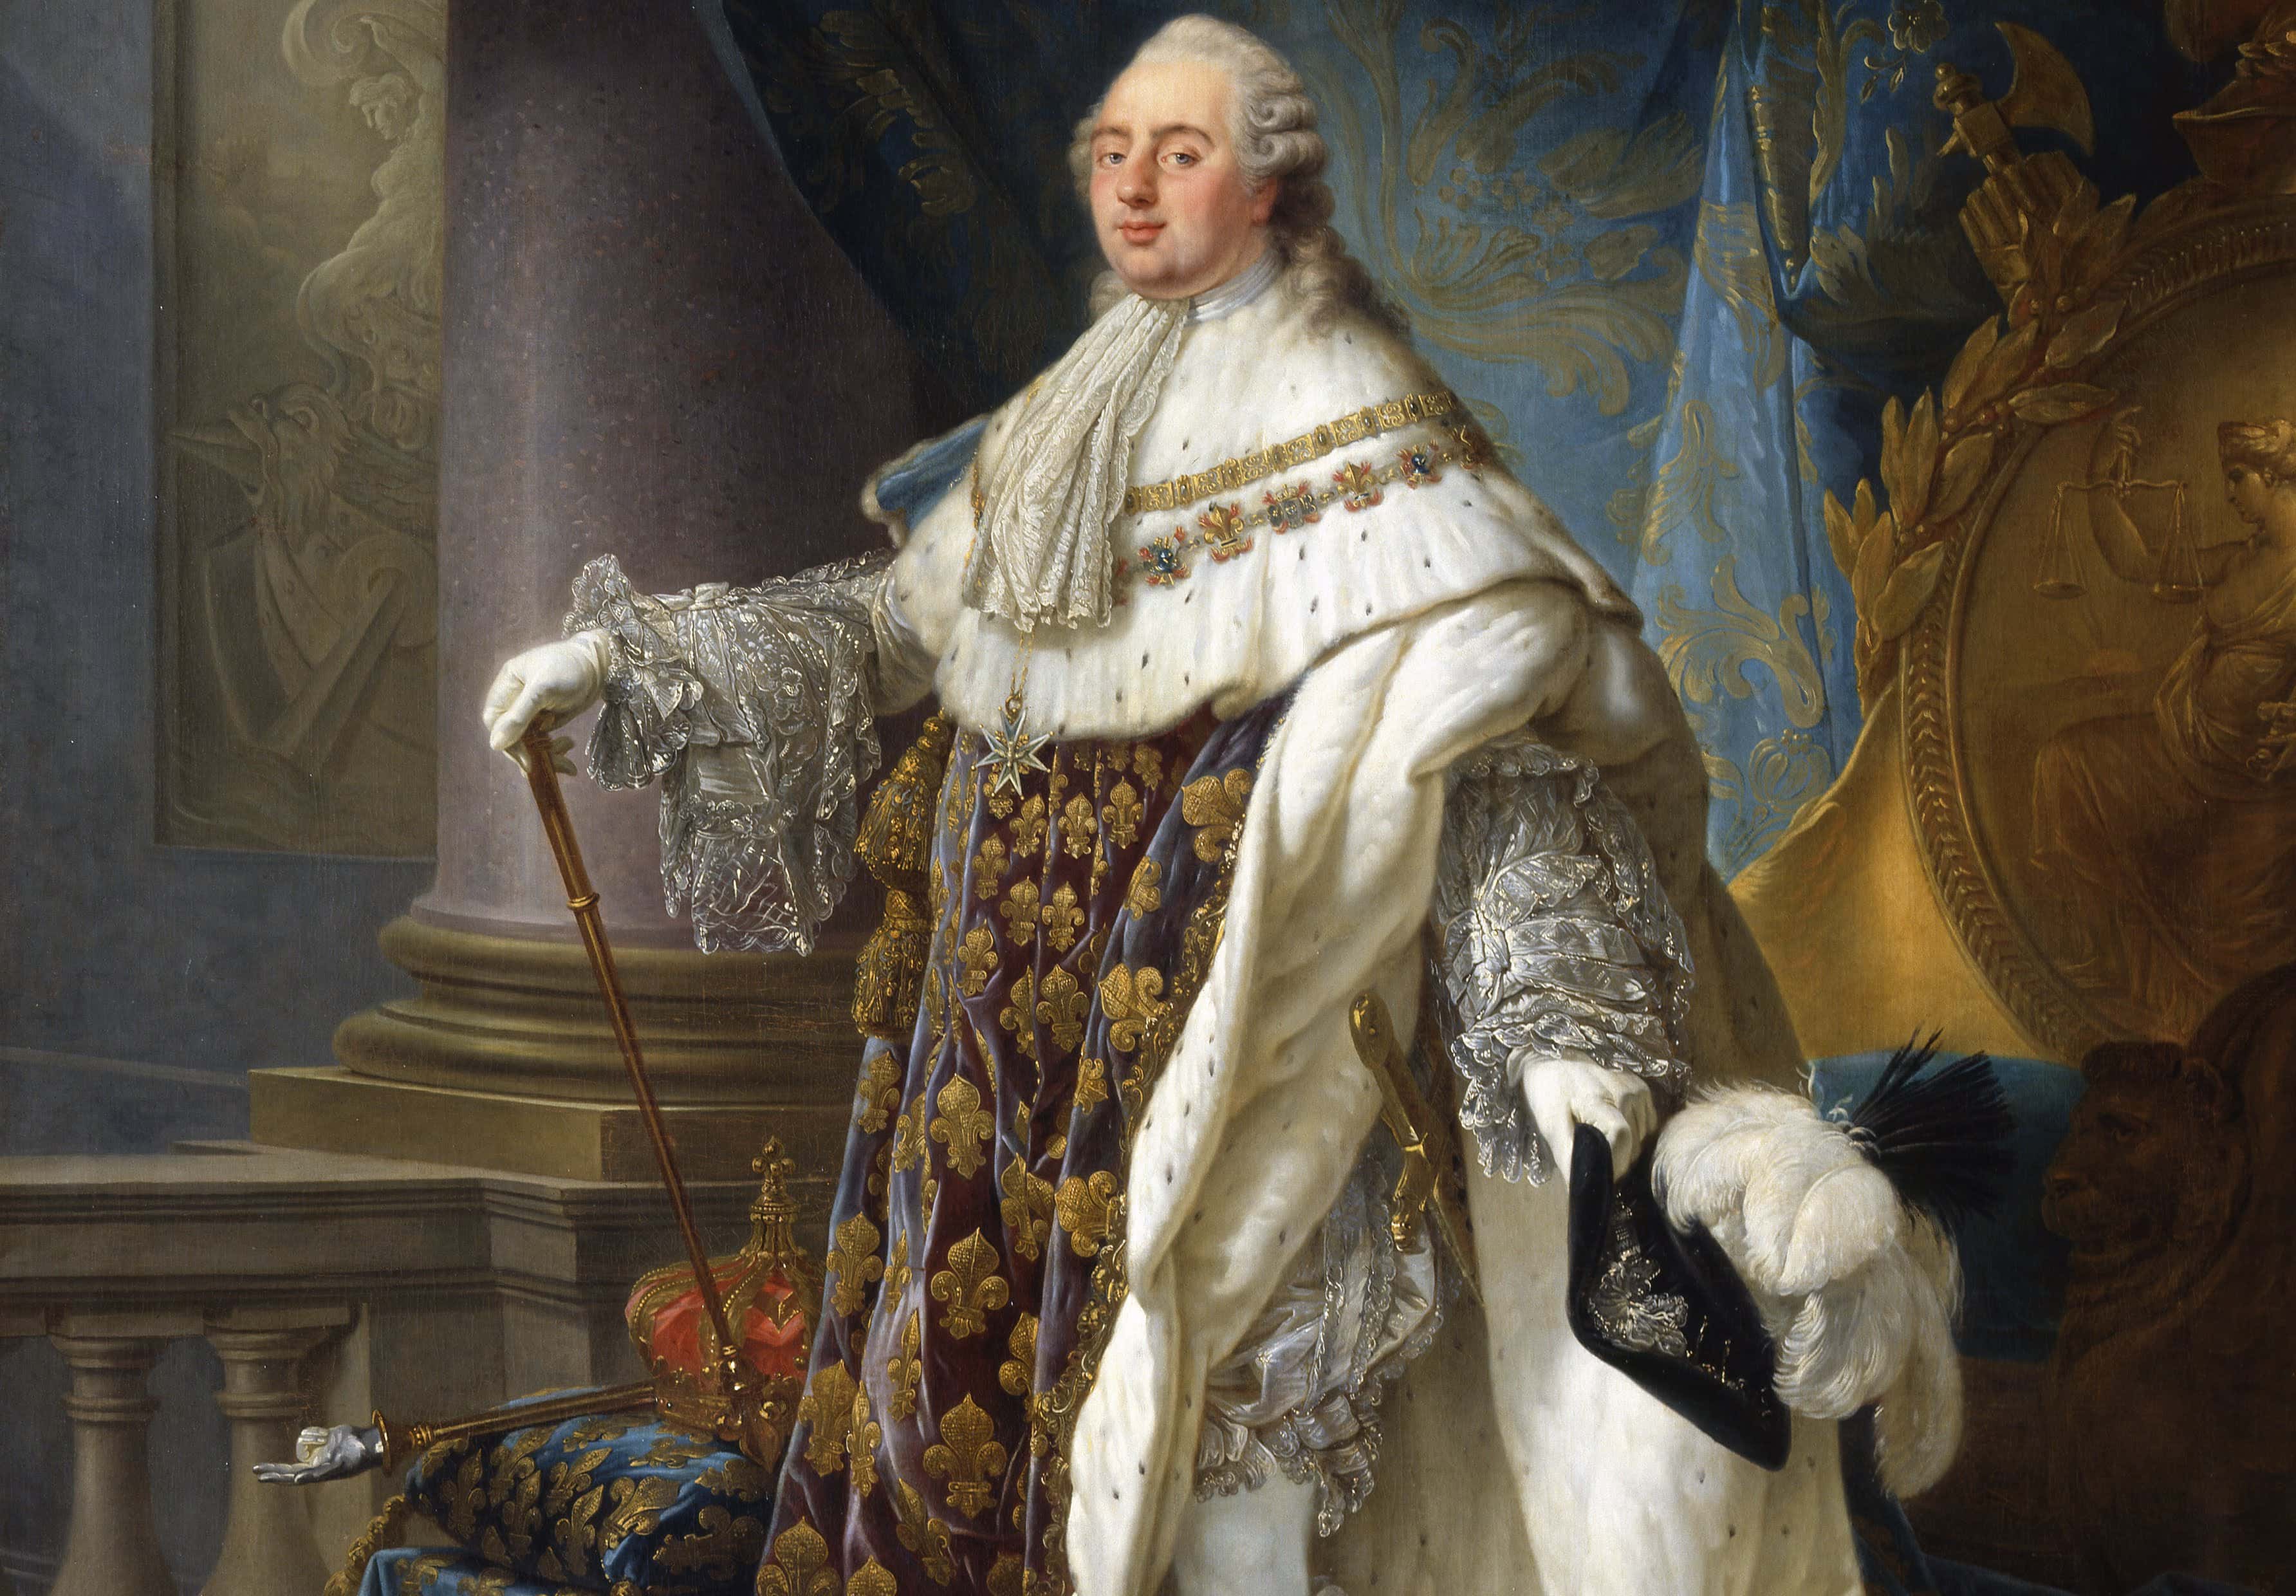 Louis XVI and the Legislative Assembly - Wikipedia